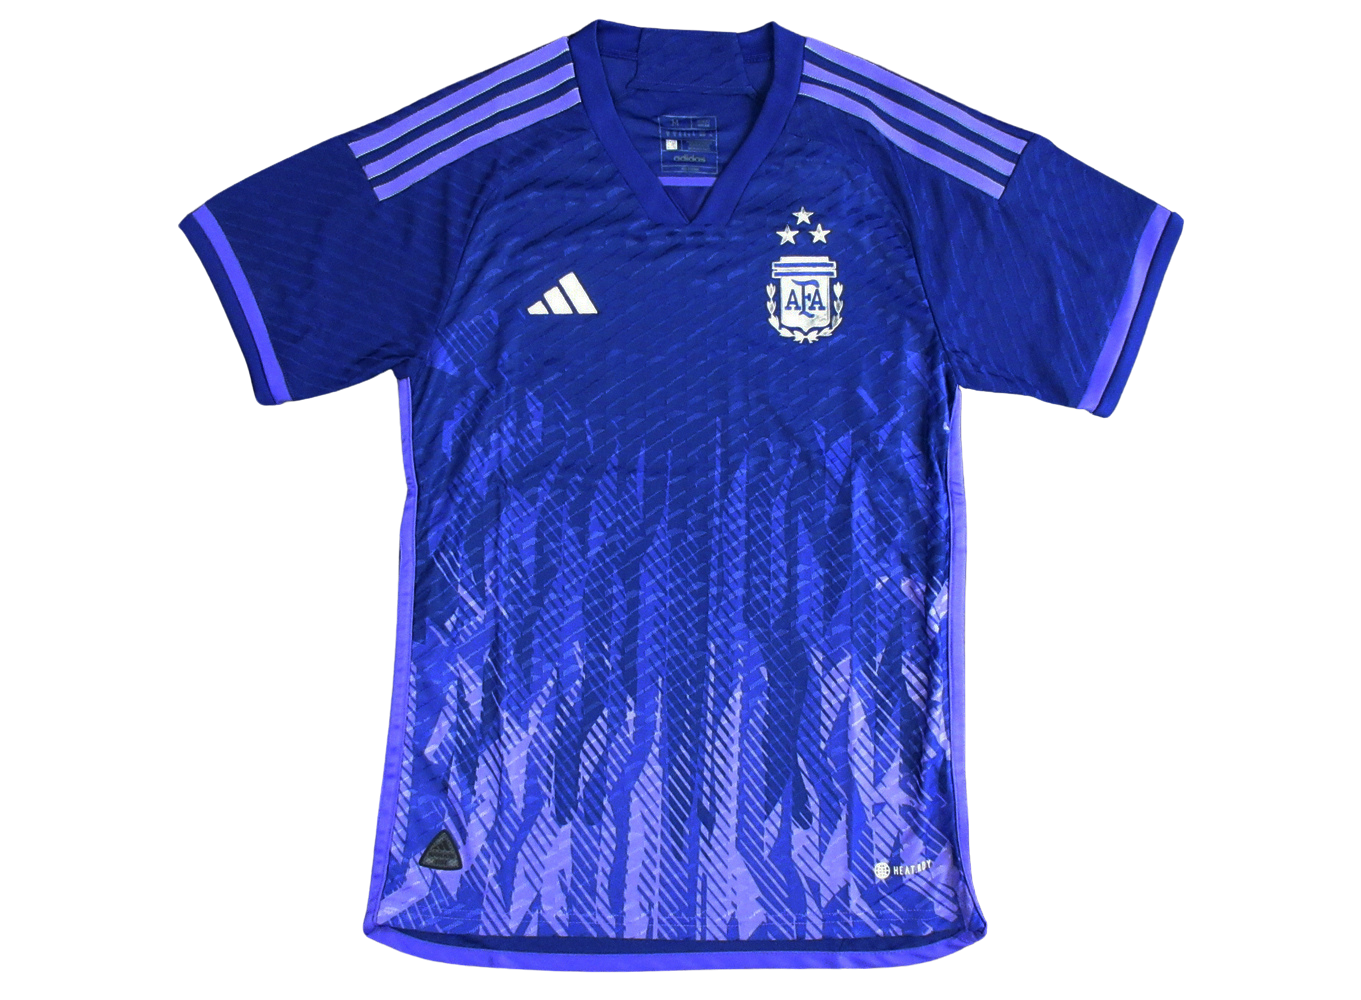 22/23 Argentina Away kit - Player version